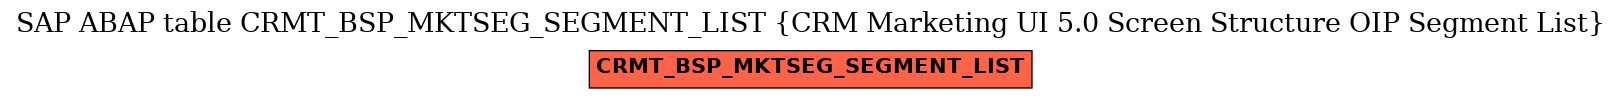 E-R Diagram for table CRMT_BSP_MKTSEG_SEGMENT_LIST (CRM Marketing UI 5.0 Screen Structure OIP Segment List)